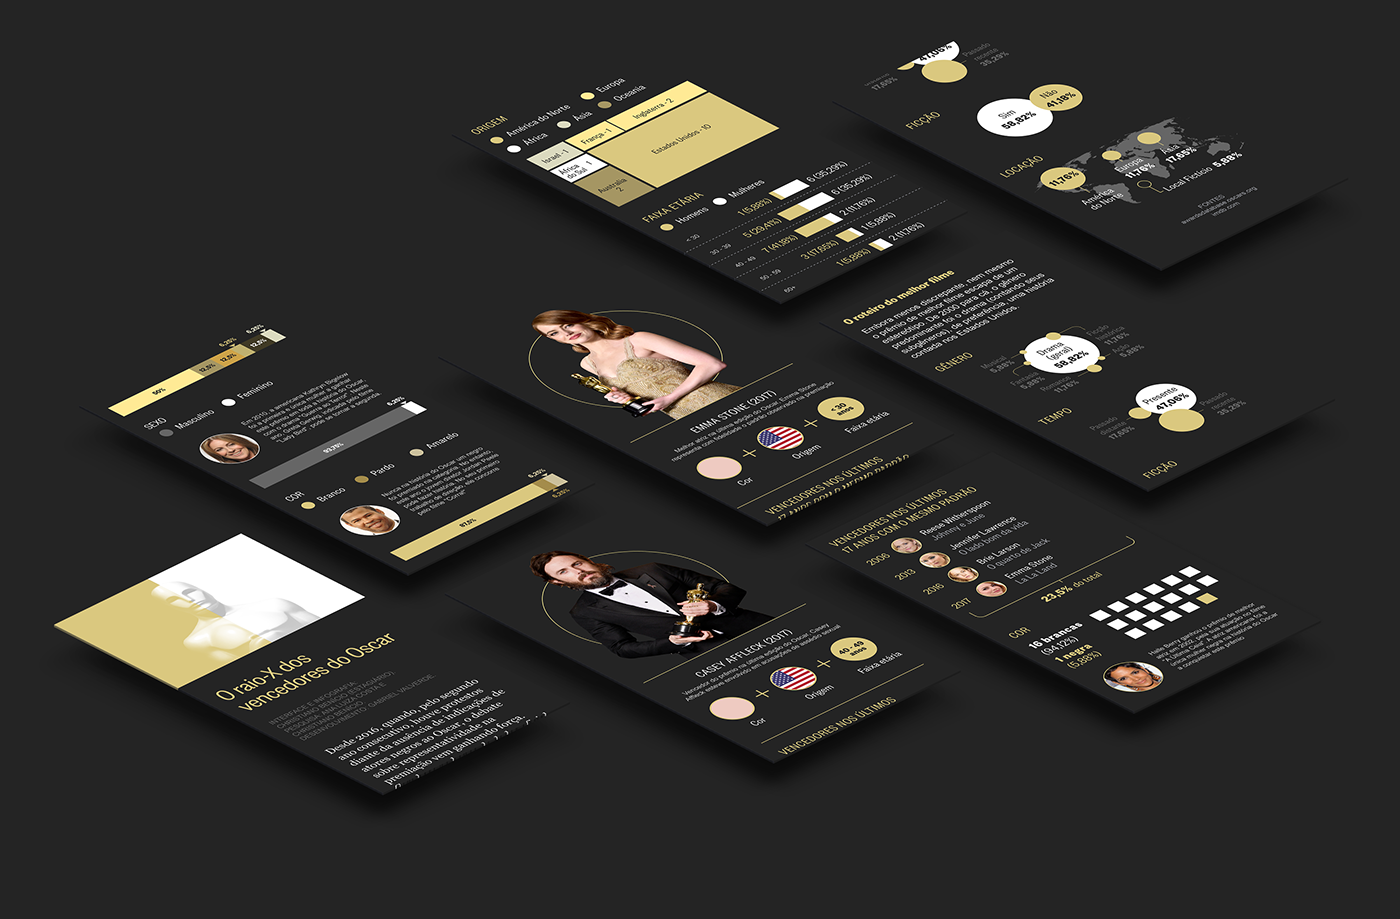 infographics dataviz data visualization Oscars information design digital infographic  Globo News Design Awards